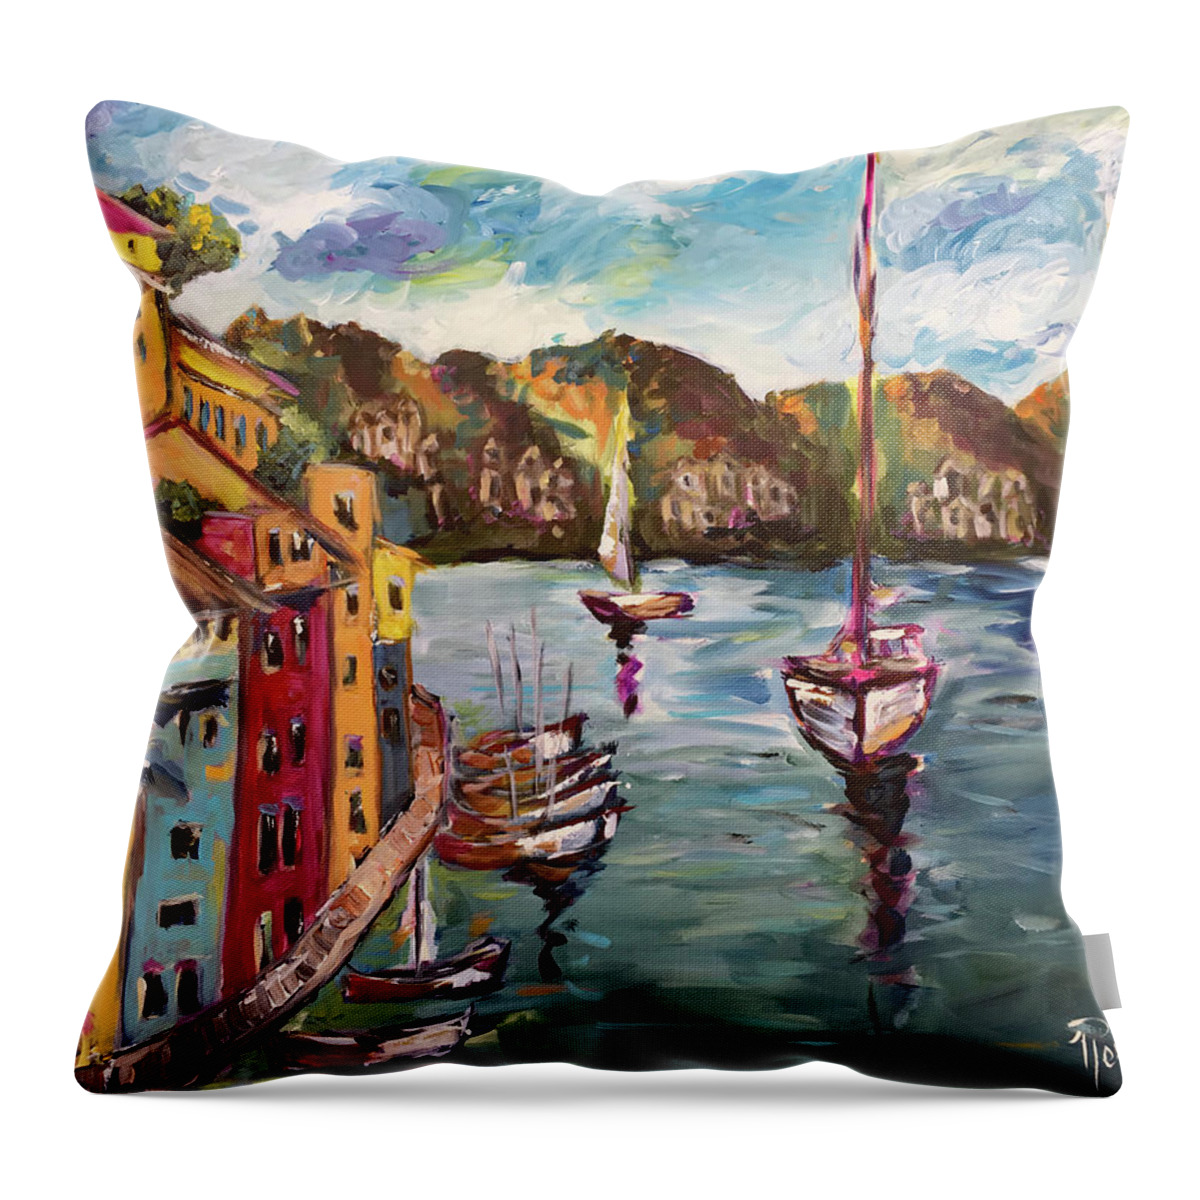 Portofino Throw Pillow featuring the painting Portofino Harbor by Roxy Rich